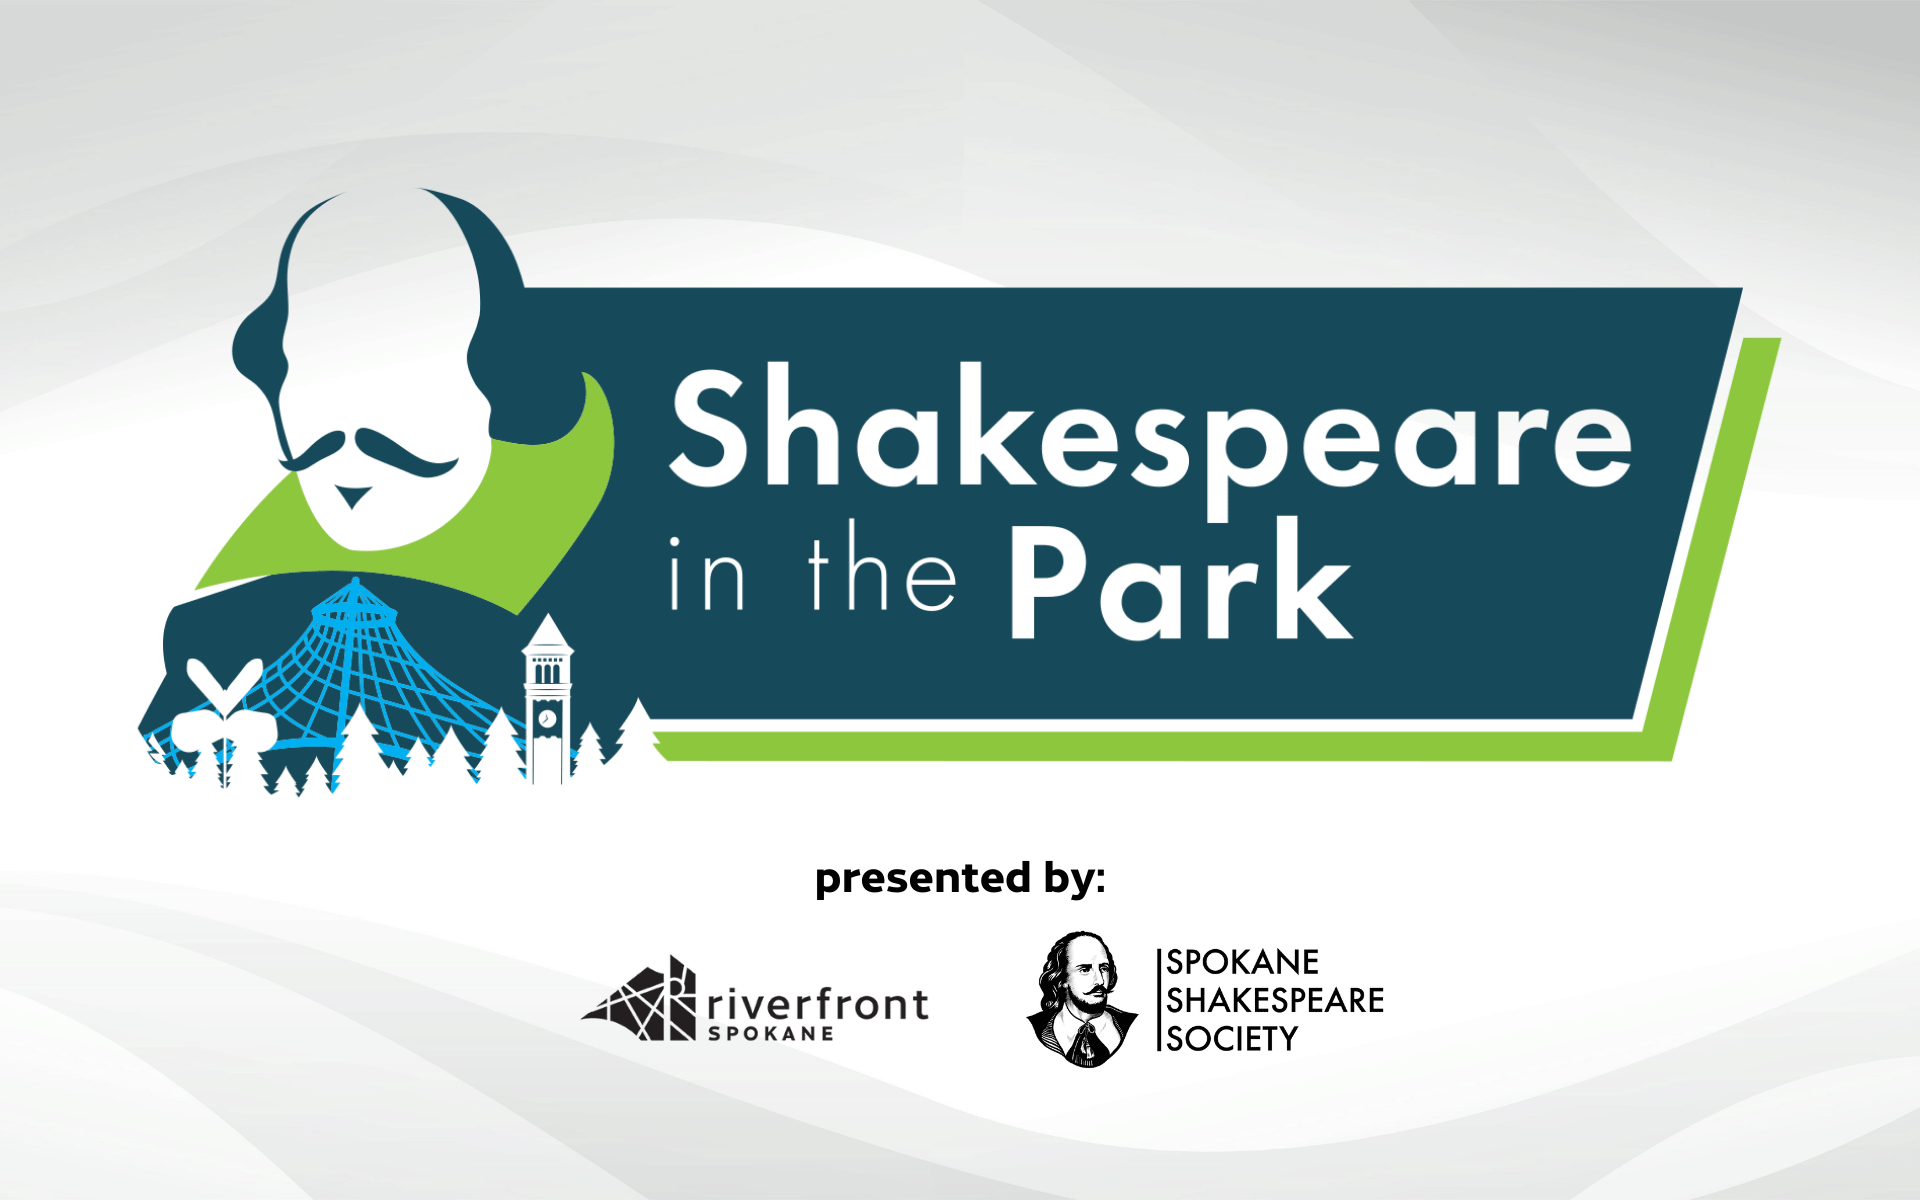 Shakespeare in the Park City of Spokane, Washington